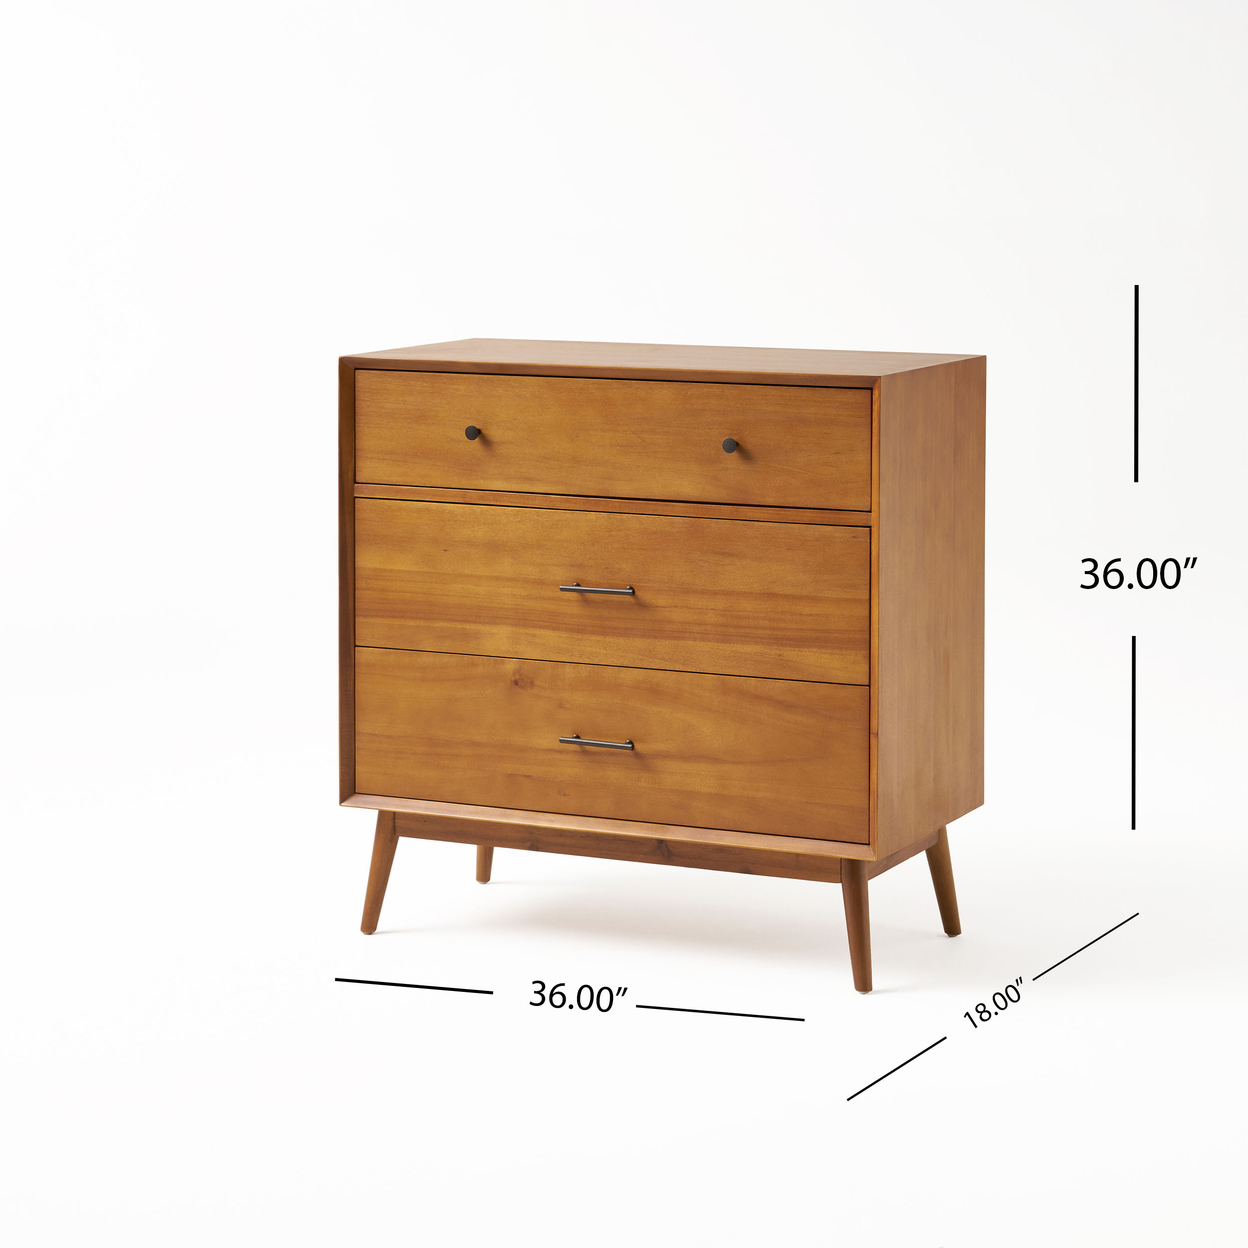 OkiOKi Mid-Century Three Drawer Dresser - Medium Brown